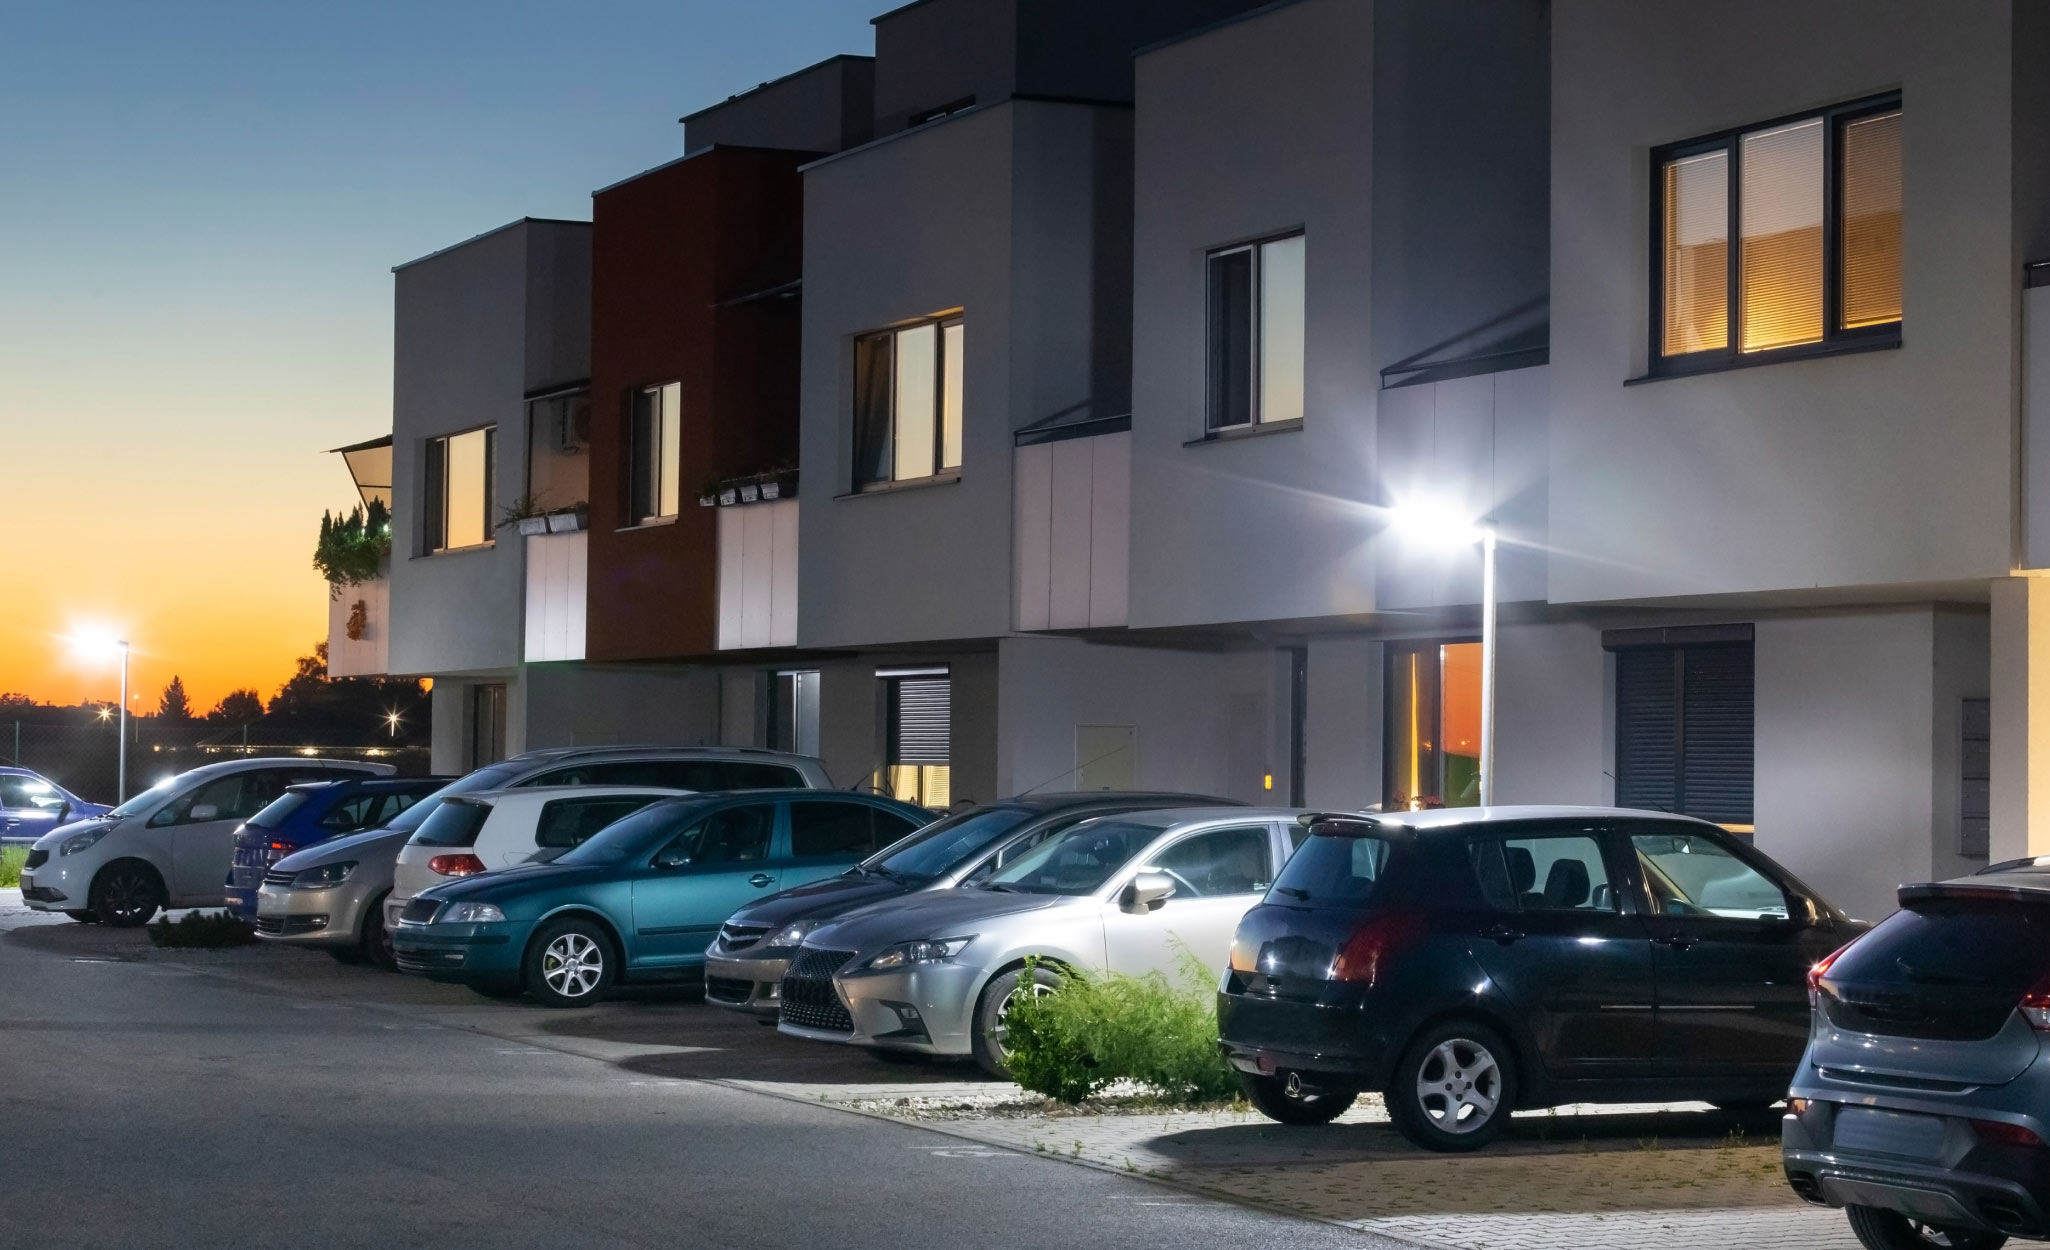 Security lights illuminate apartment parking spaces.